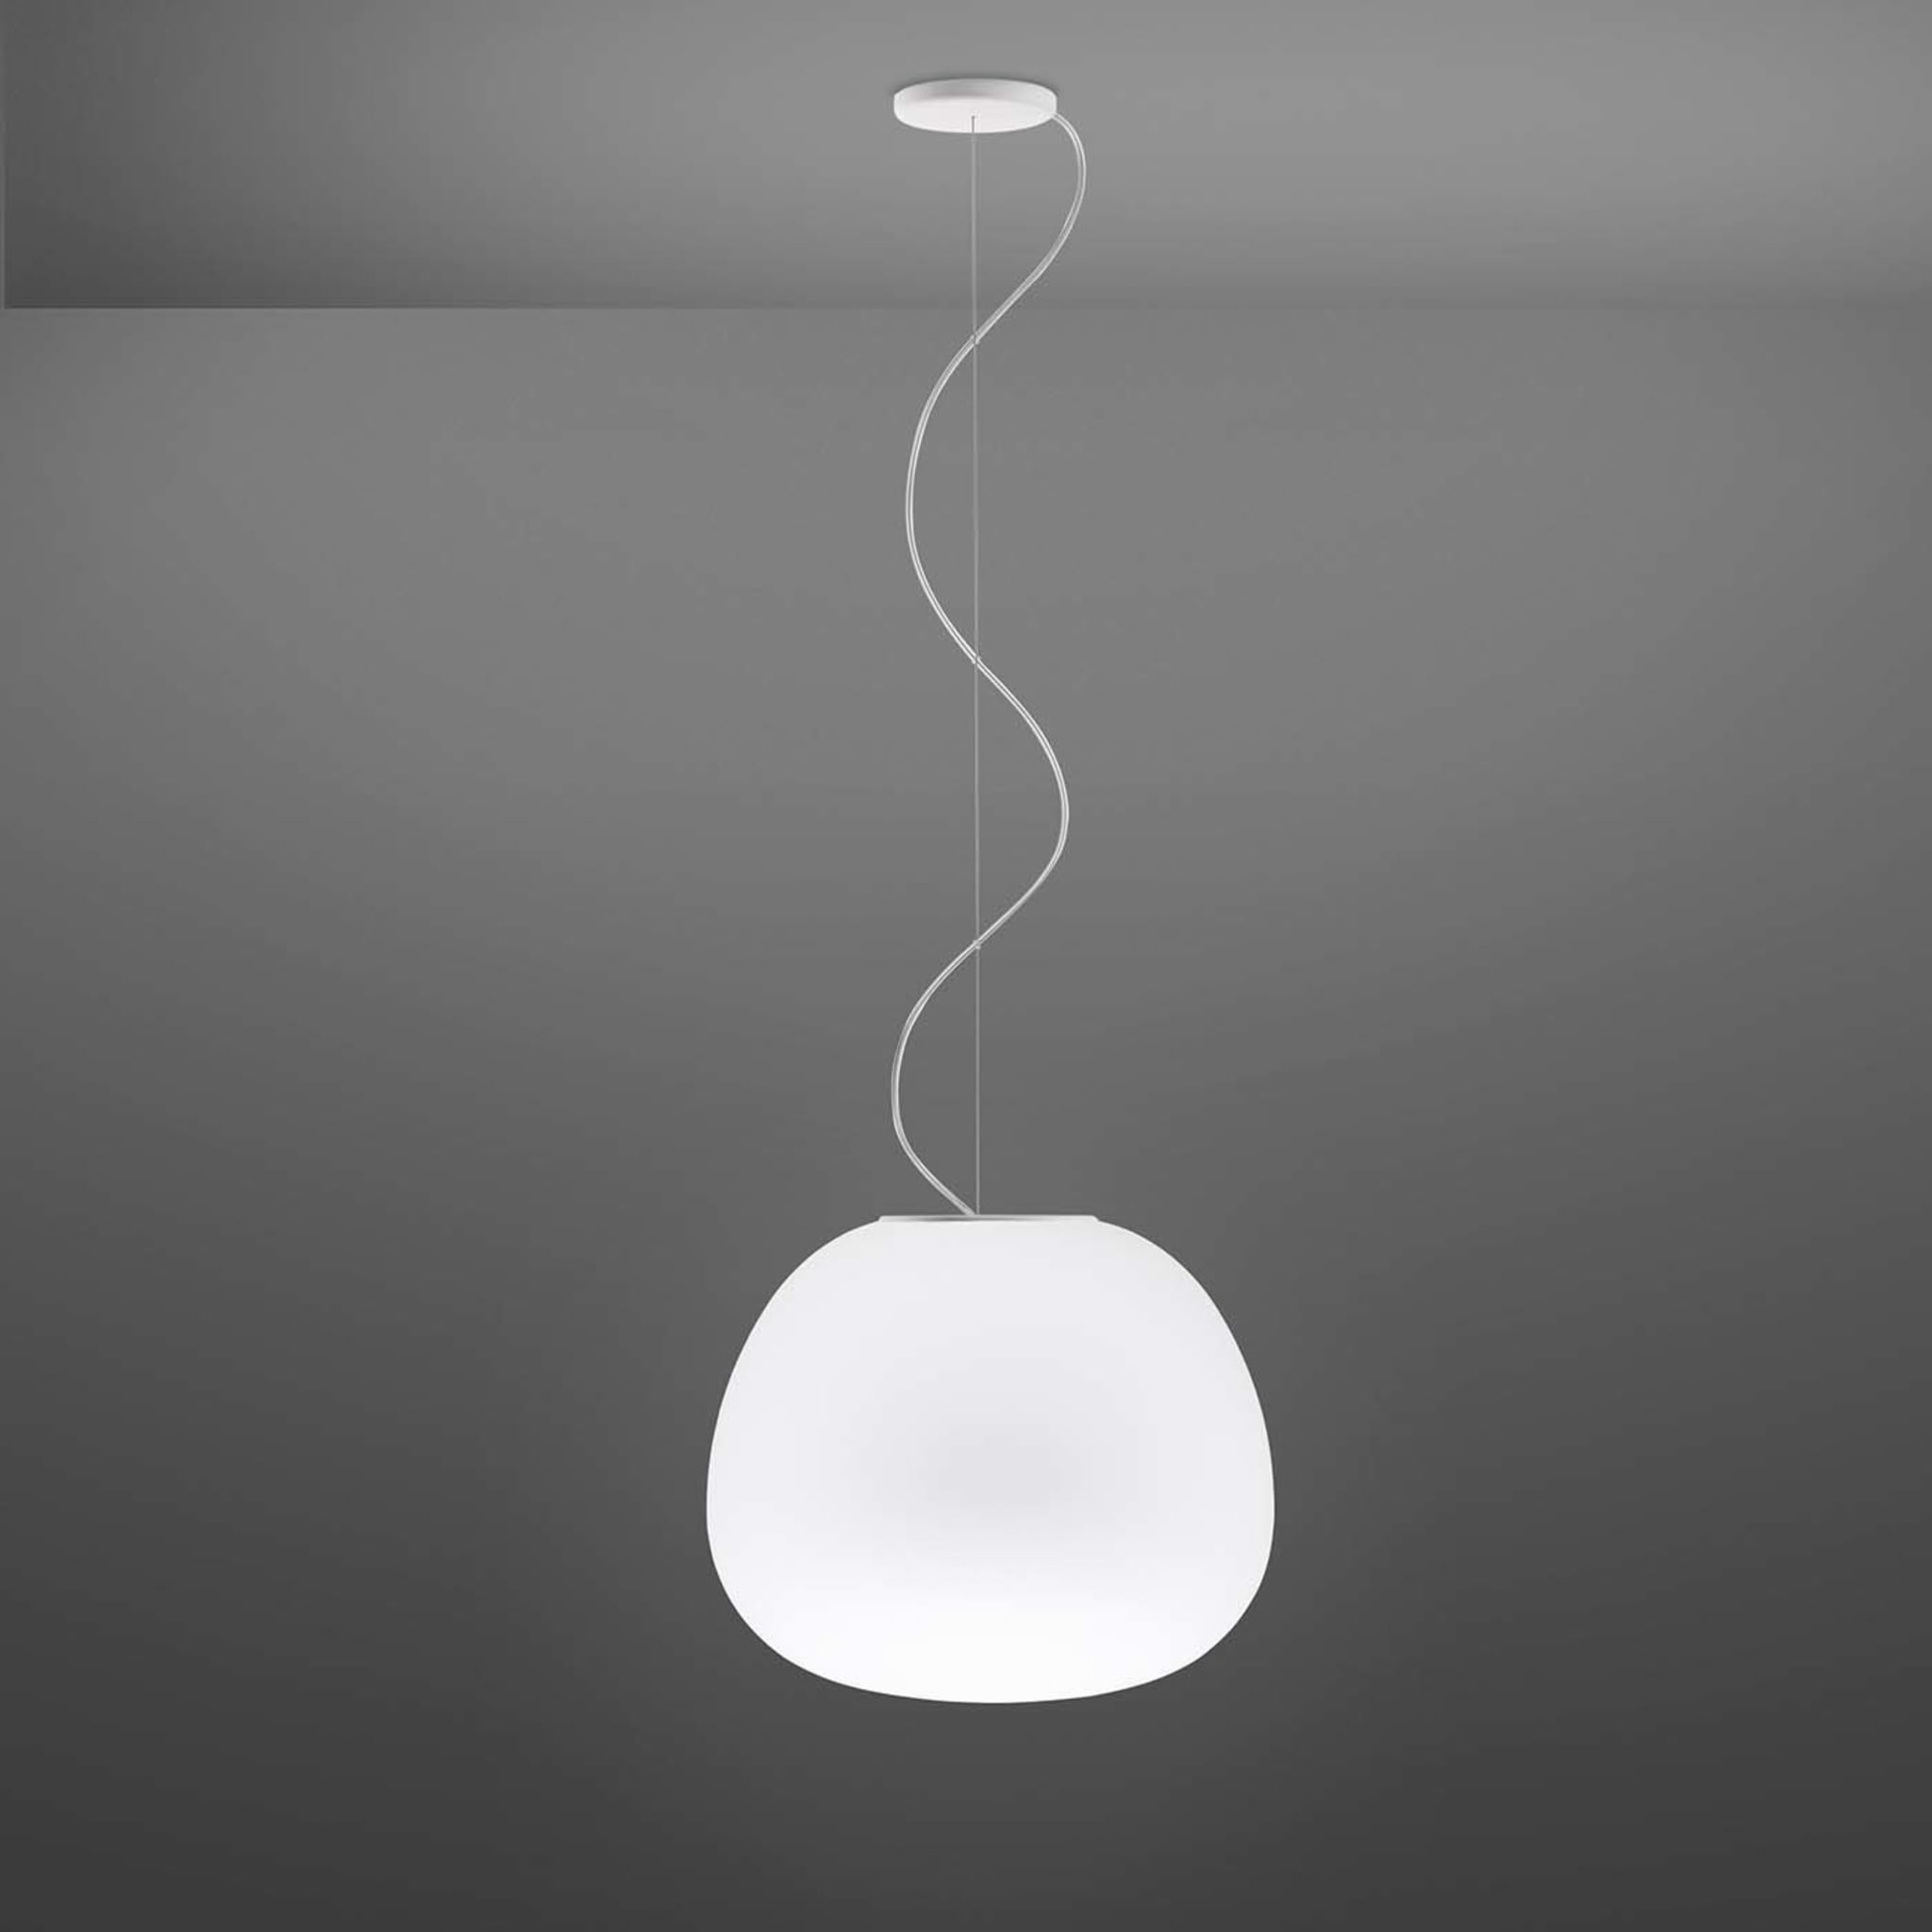 Lumi Mochi Pendant Lamp by Saggia & Sommella - Alternative view 1